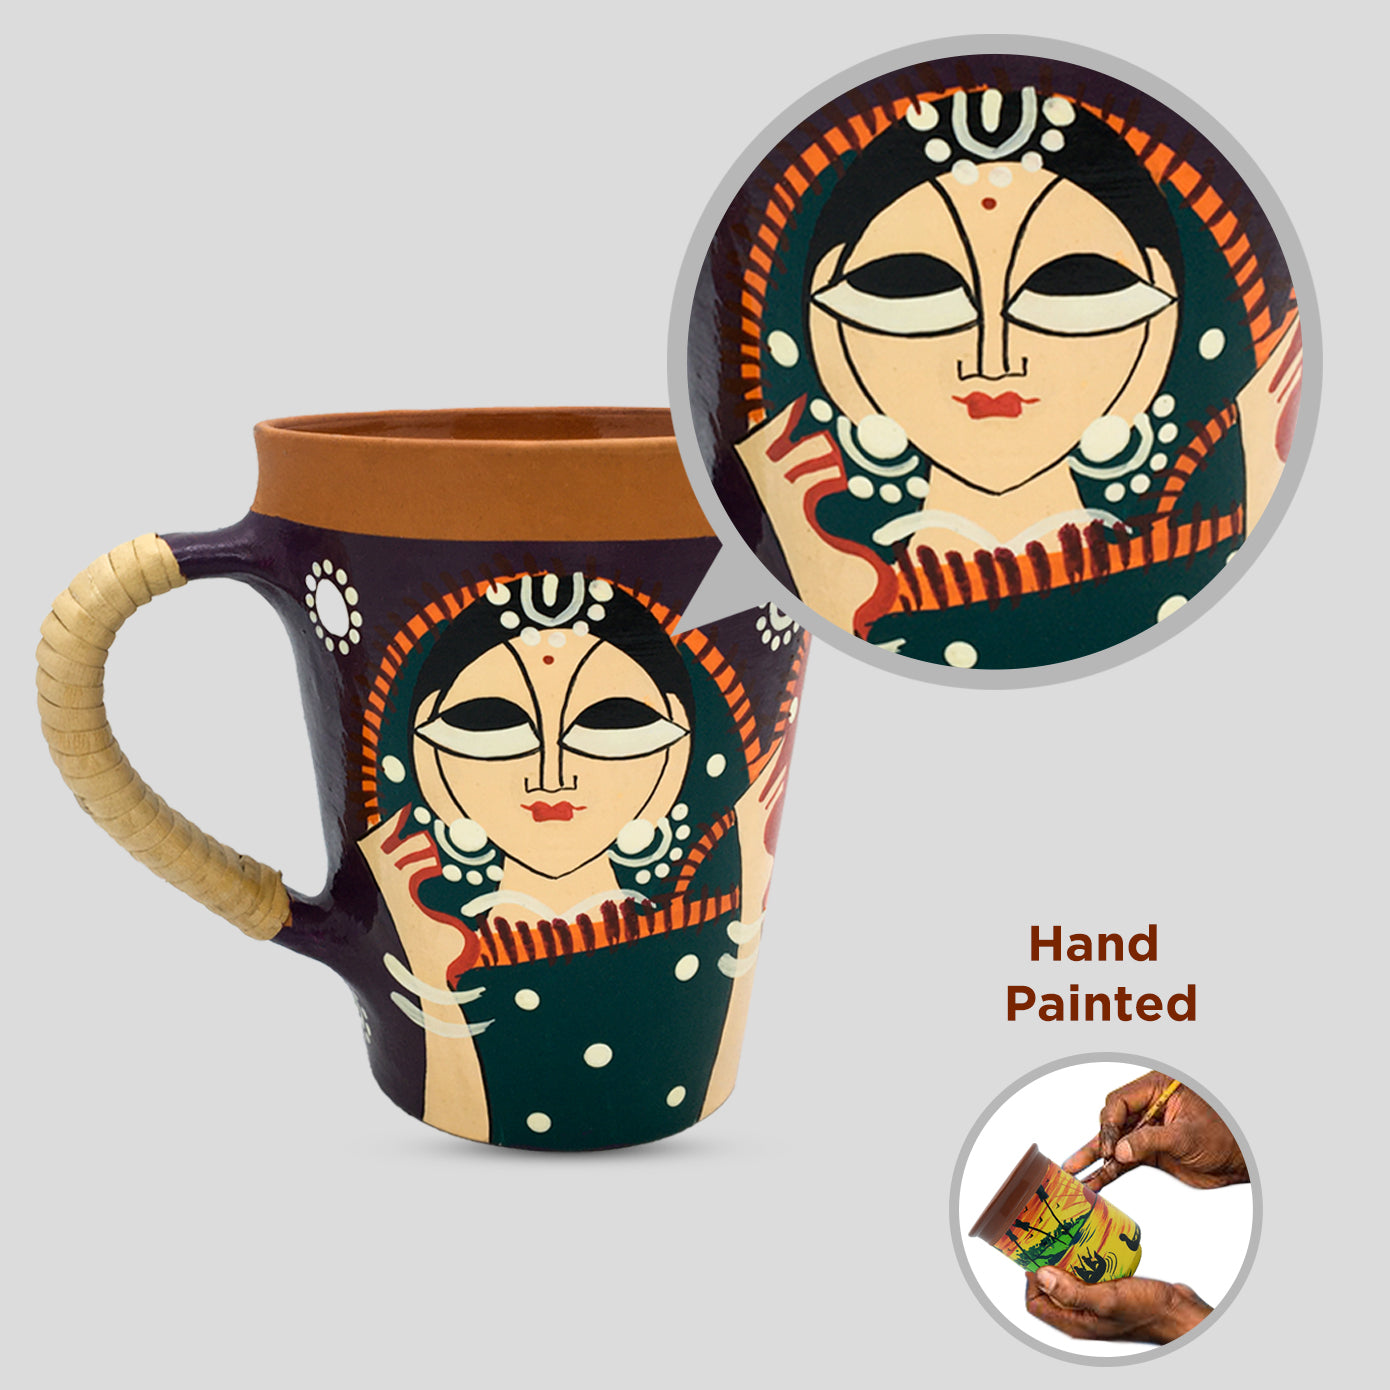 'Not Your Chai Banane Waali' Hand Painted Terracotta Coffee Mug